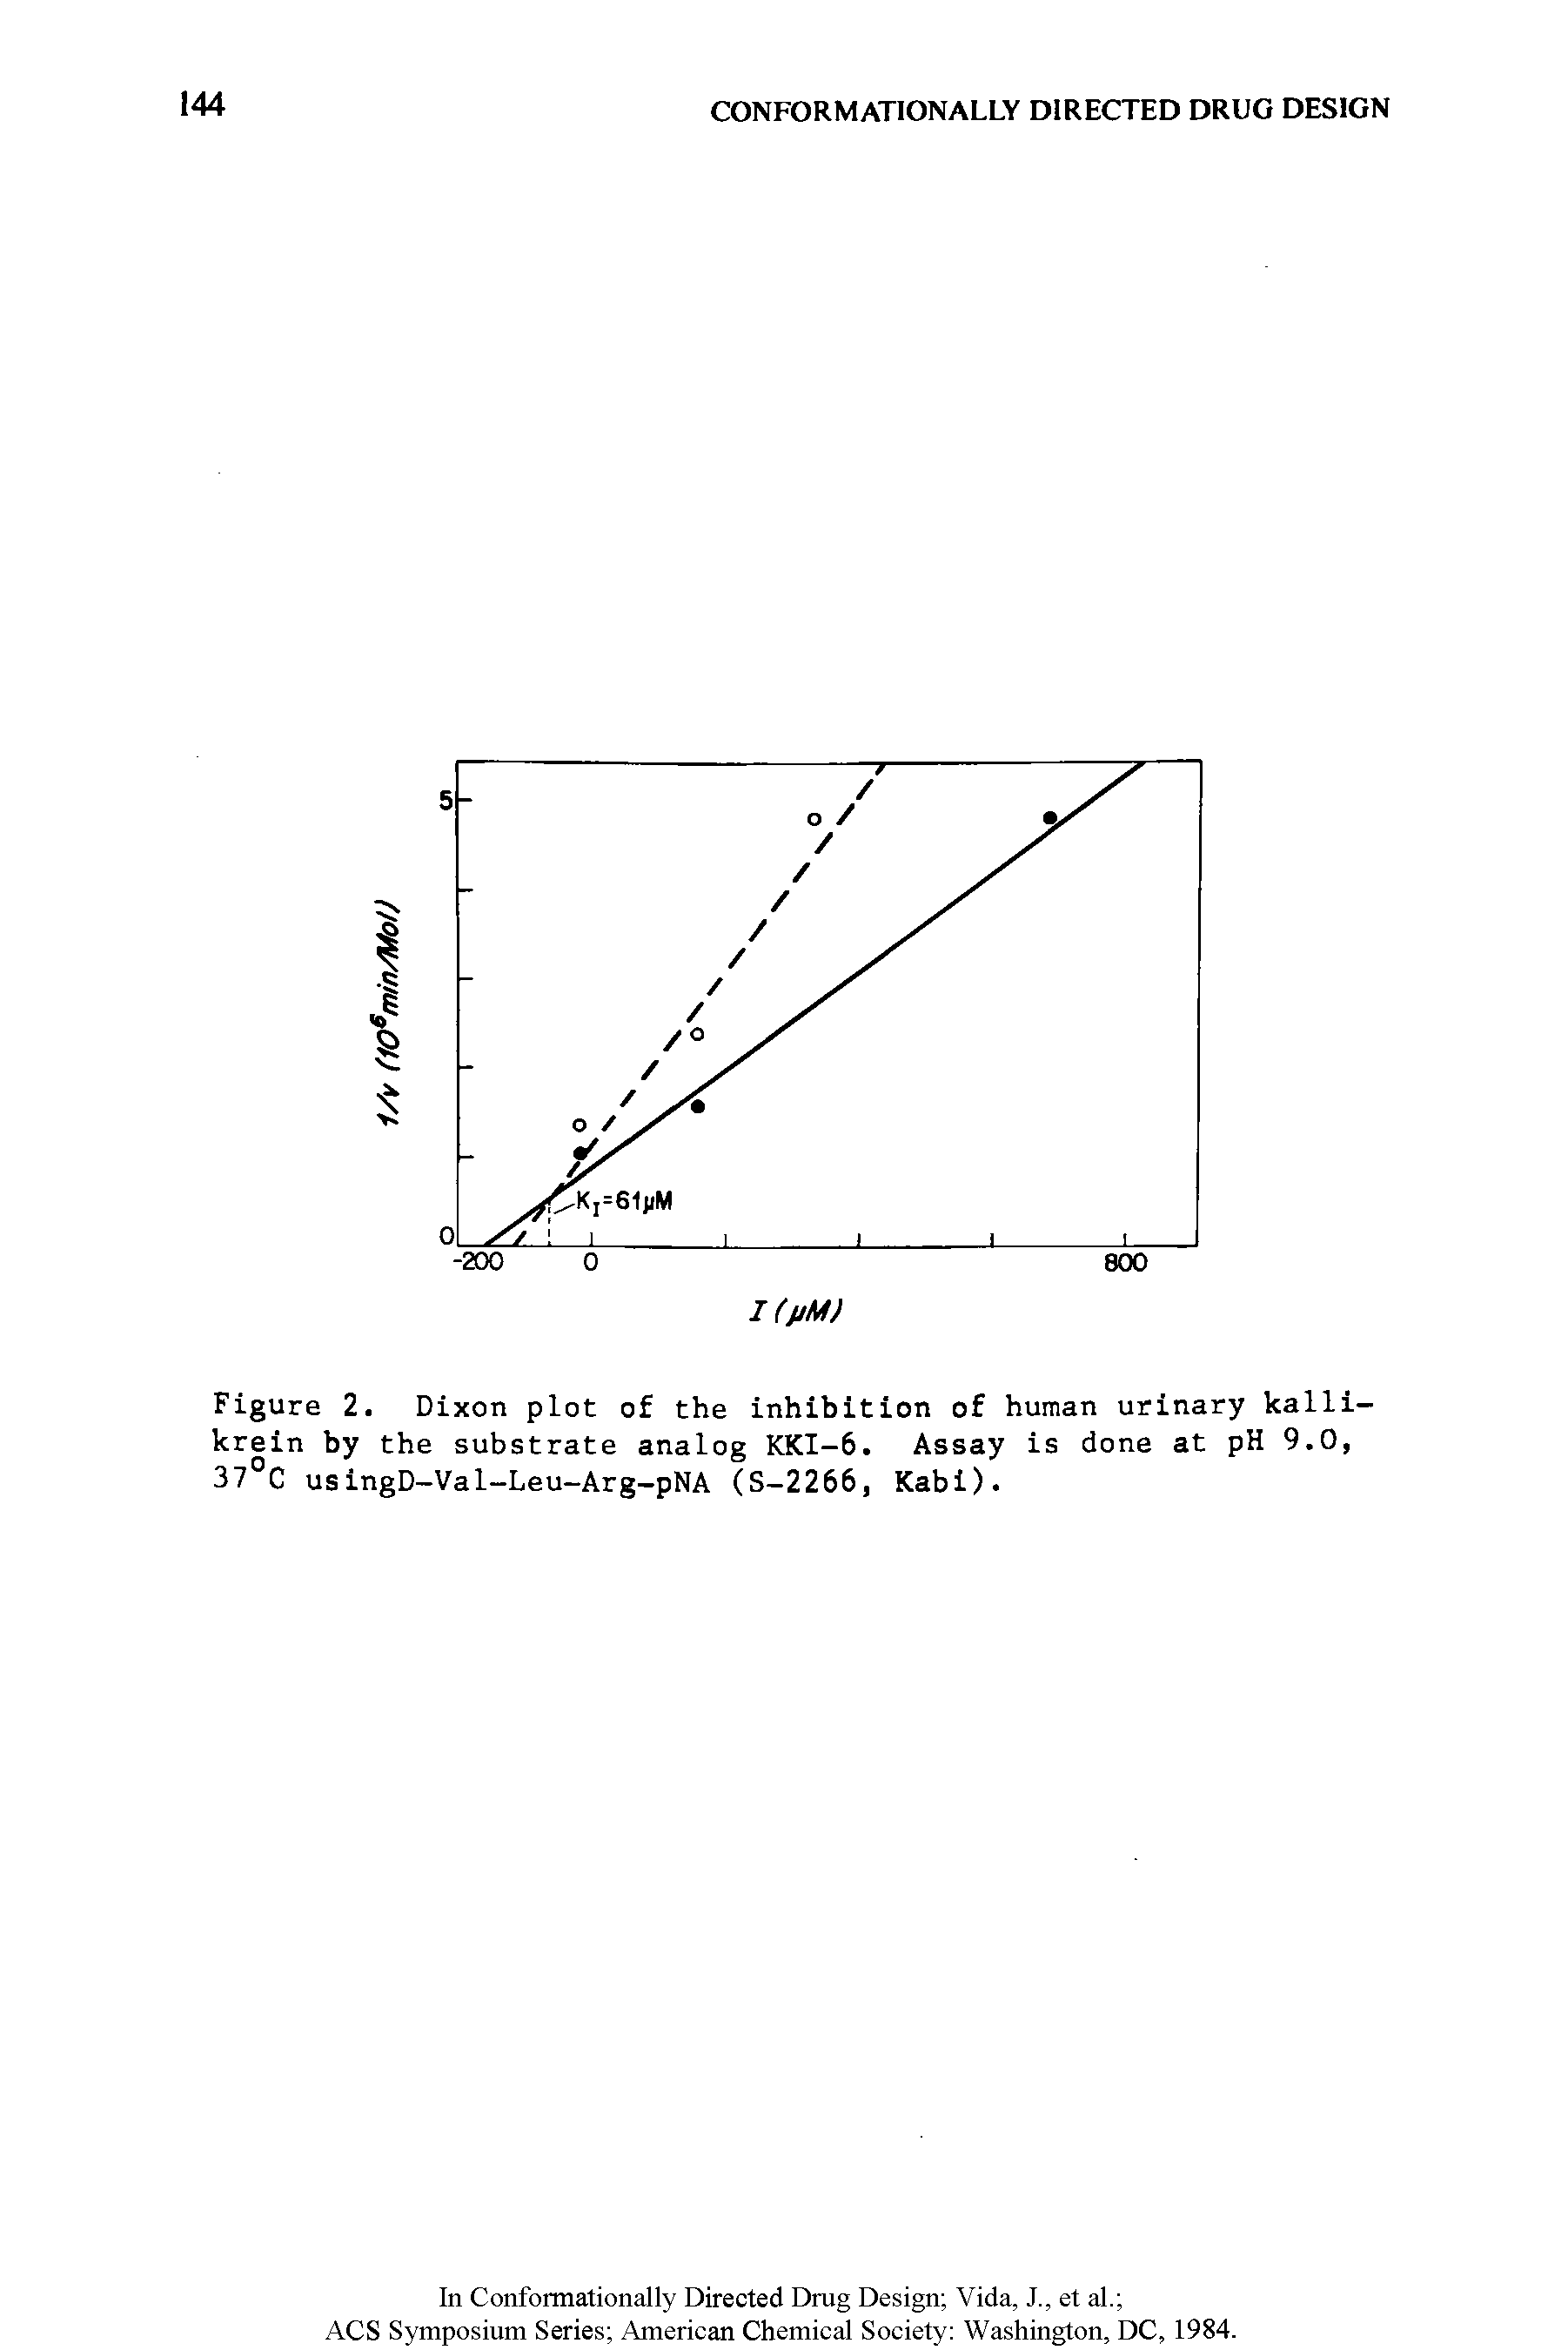 Figure 2. Dixon plot of the inhibition of human urinary kalli-krein by the substrate analog KKI-6. Assay is done at pH 9.0, 37°C usingD-Val-Leu-Arg-pNA (S-2266, Kabi).